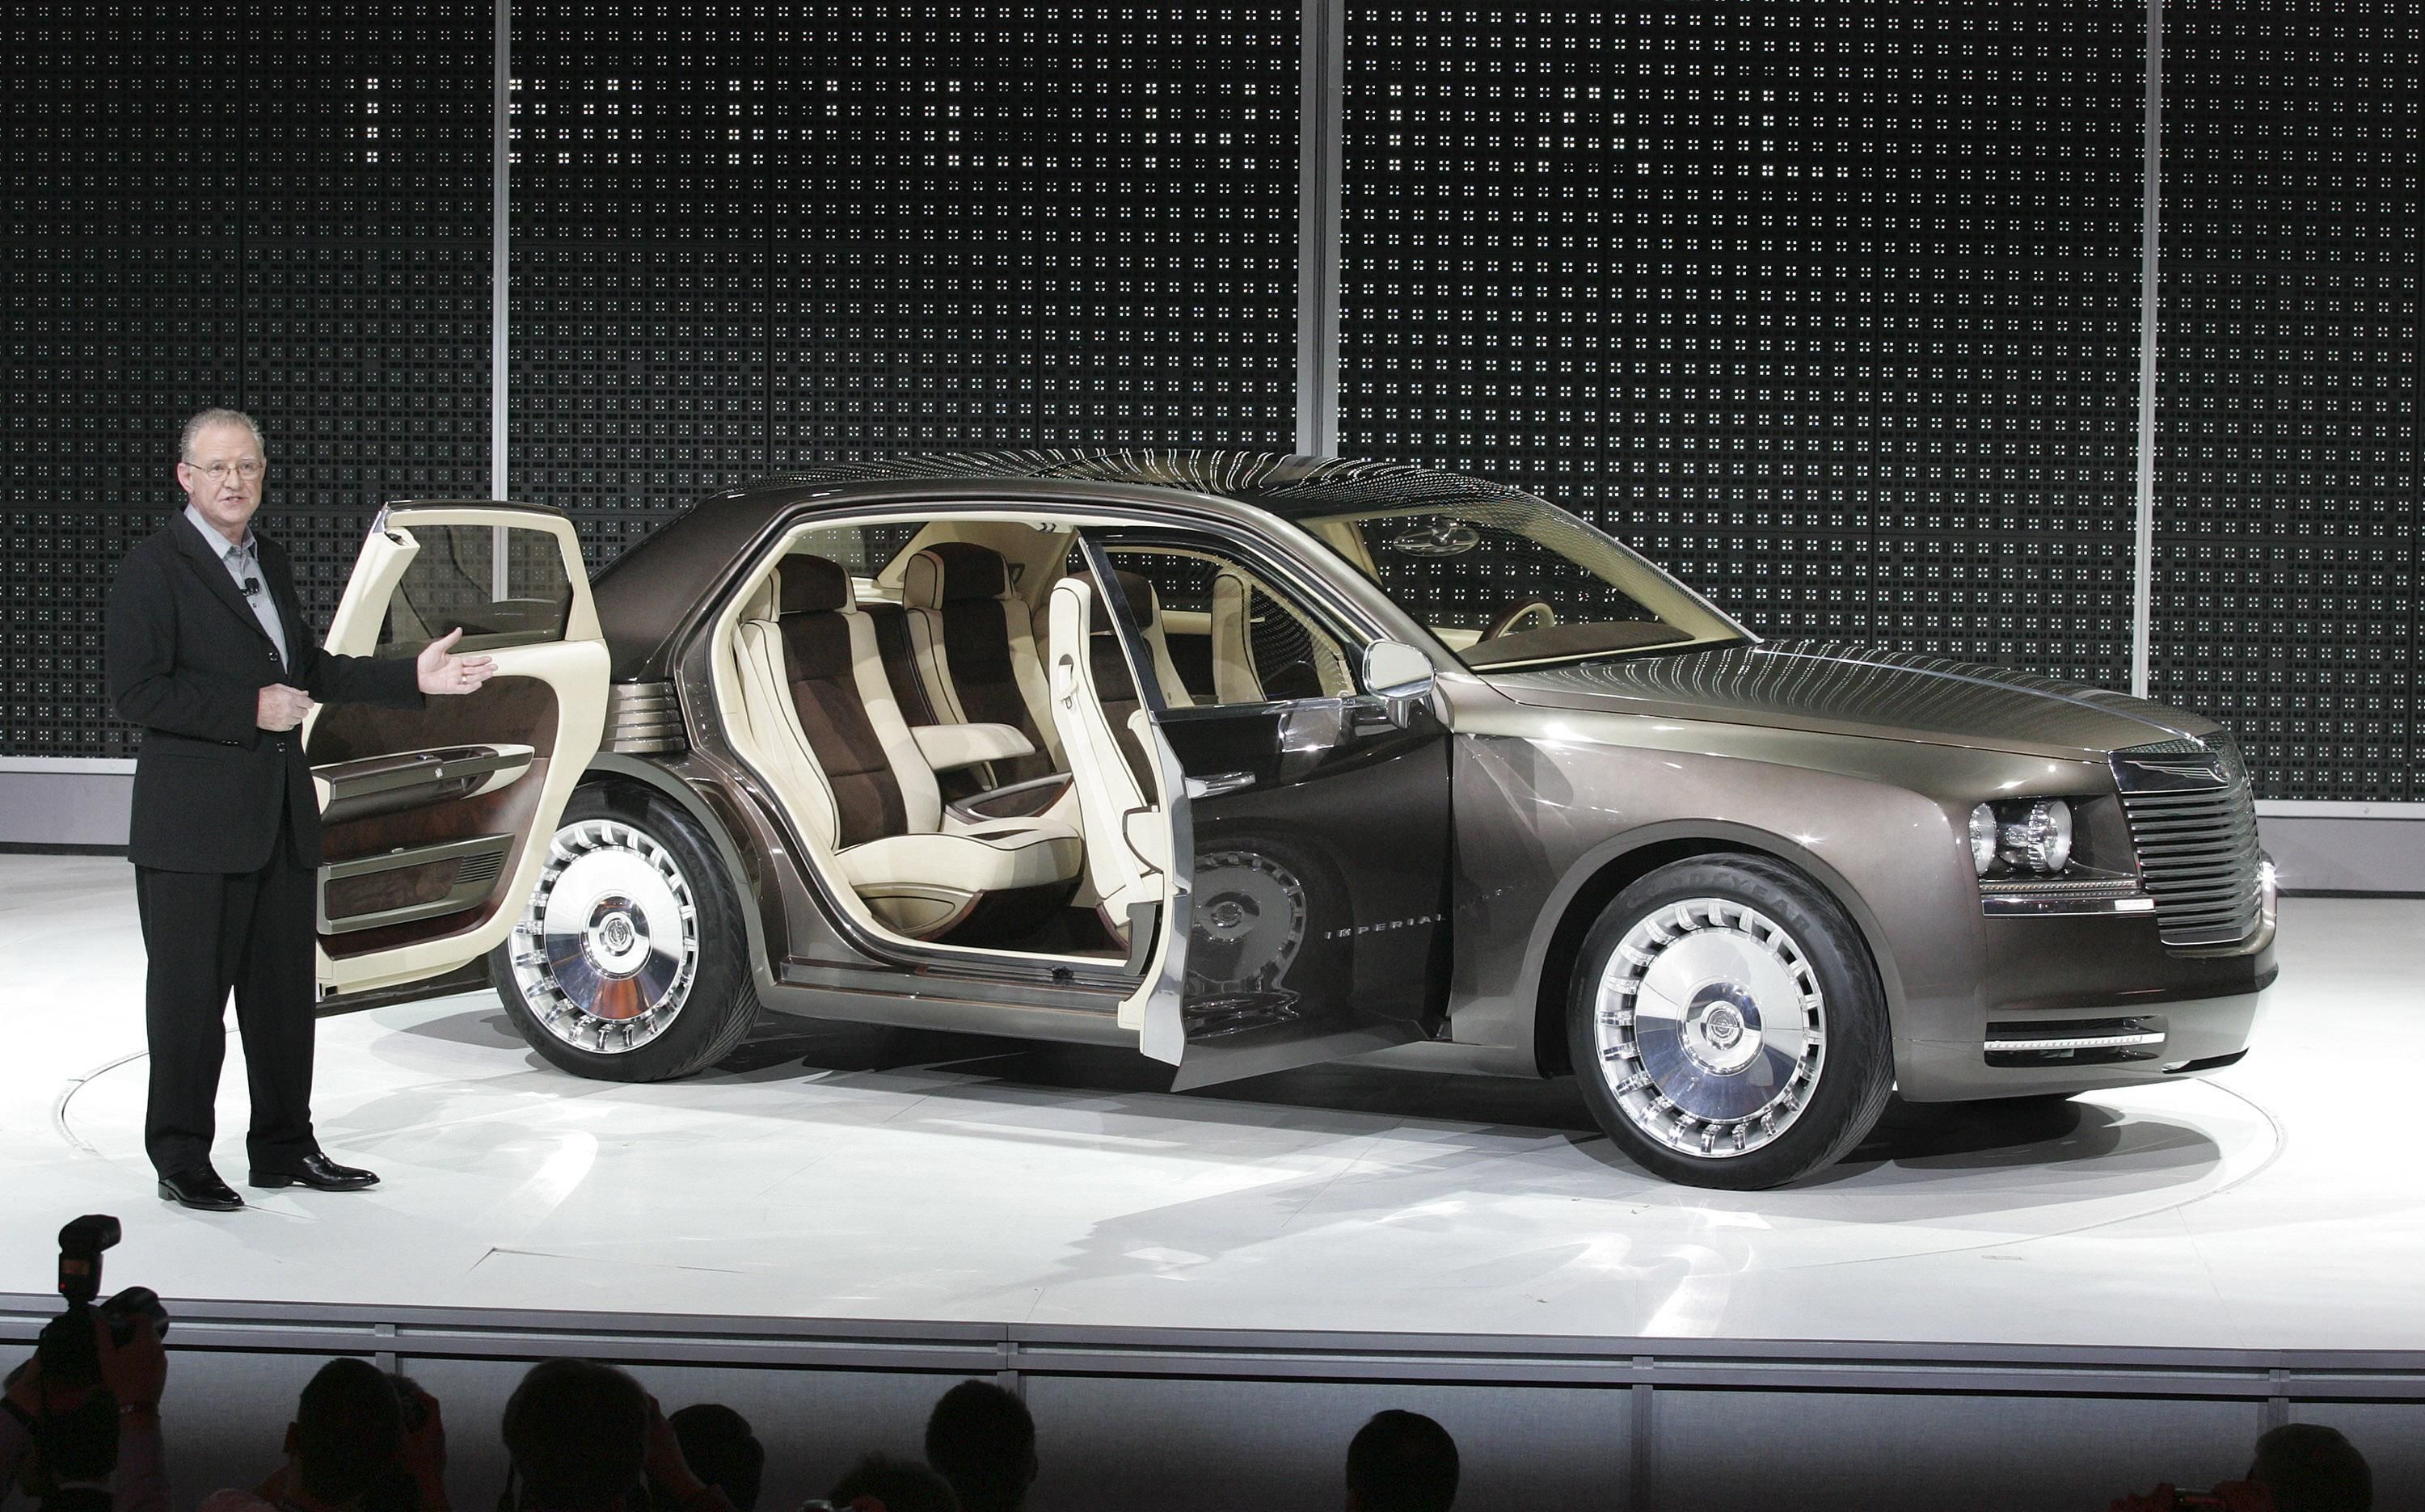 Chrysler Imperial concept